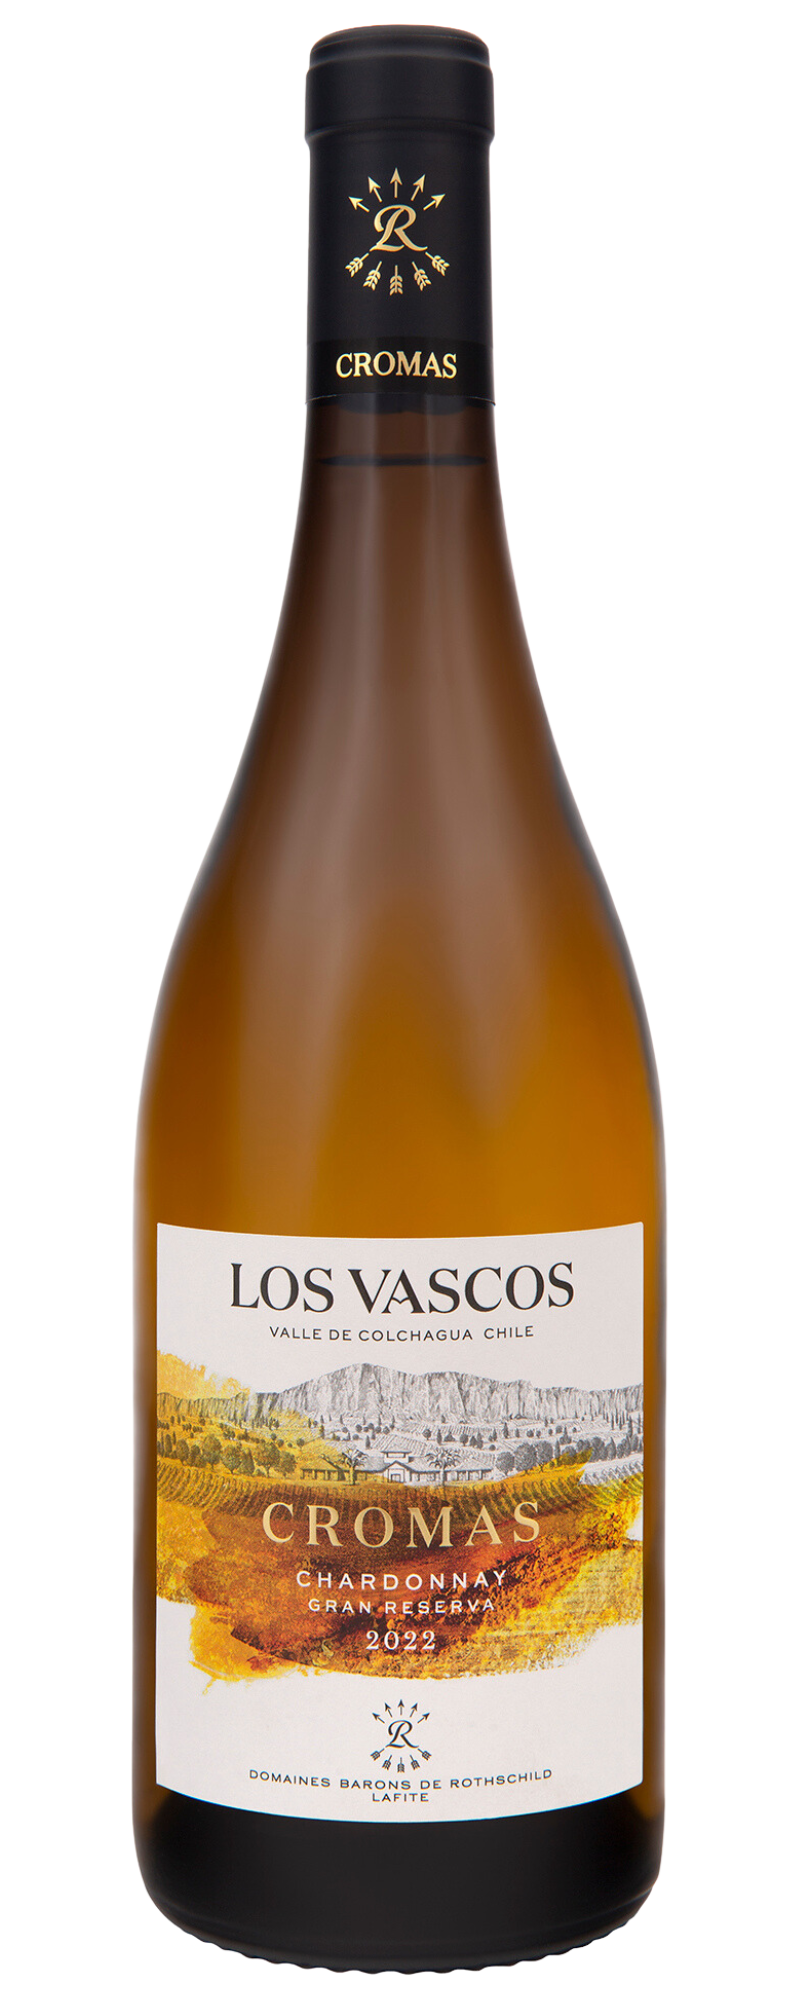 Los Vascos Cromas Chardonnay Gran Reserva 2022